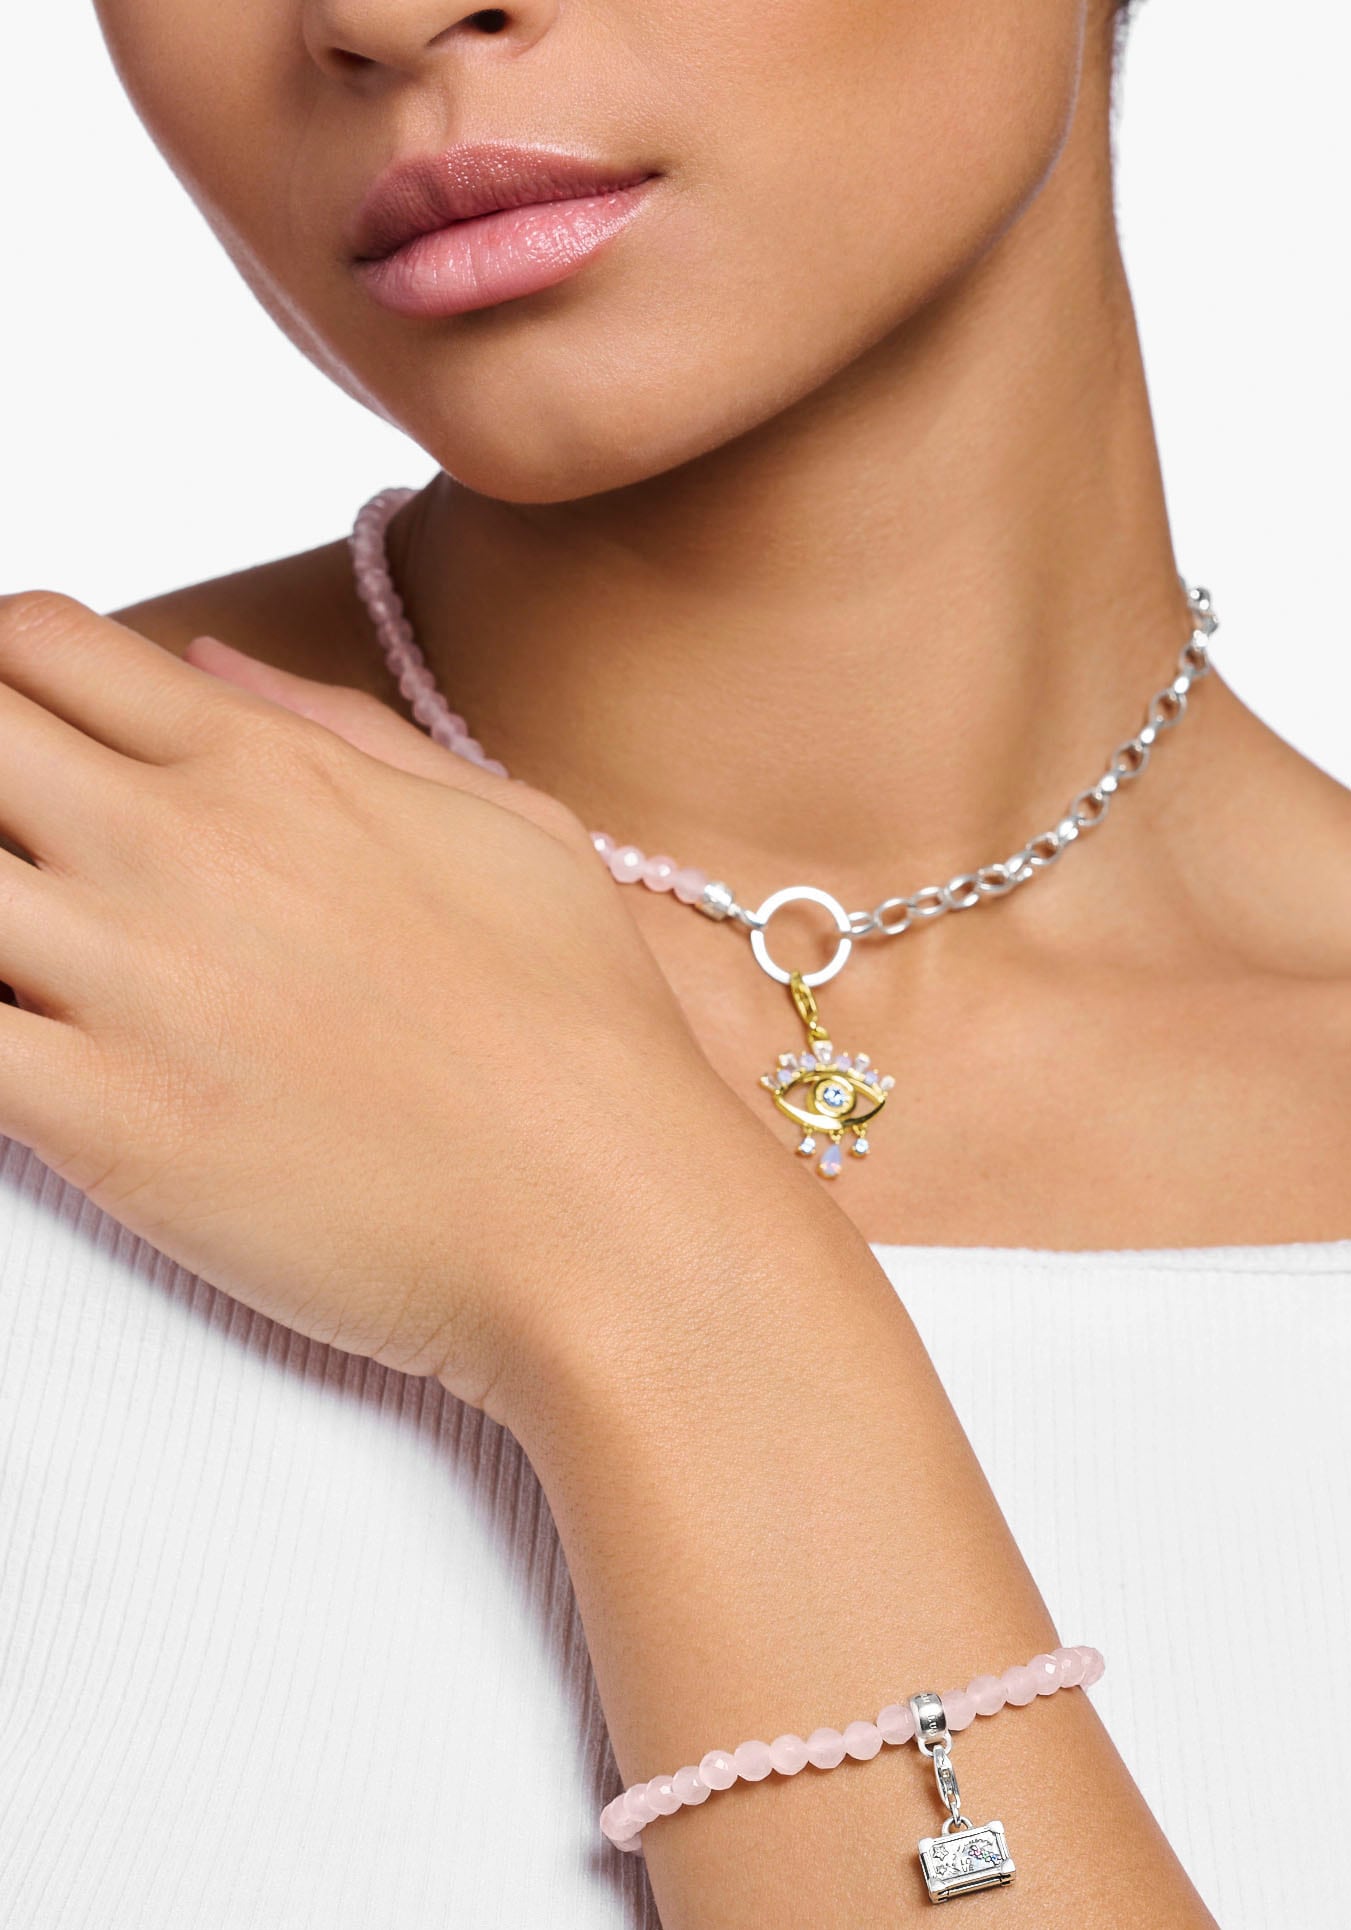 THOMAS SABO Armband »rosa Perlen, schwarze Perlen, A2097-034-9-L19V, A2097-130-11-L19V«, mit Rosenquarz oder Onyx